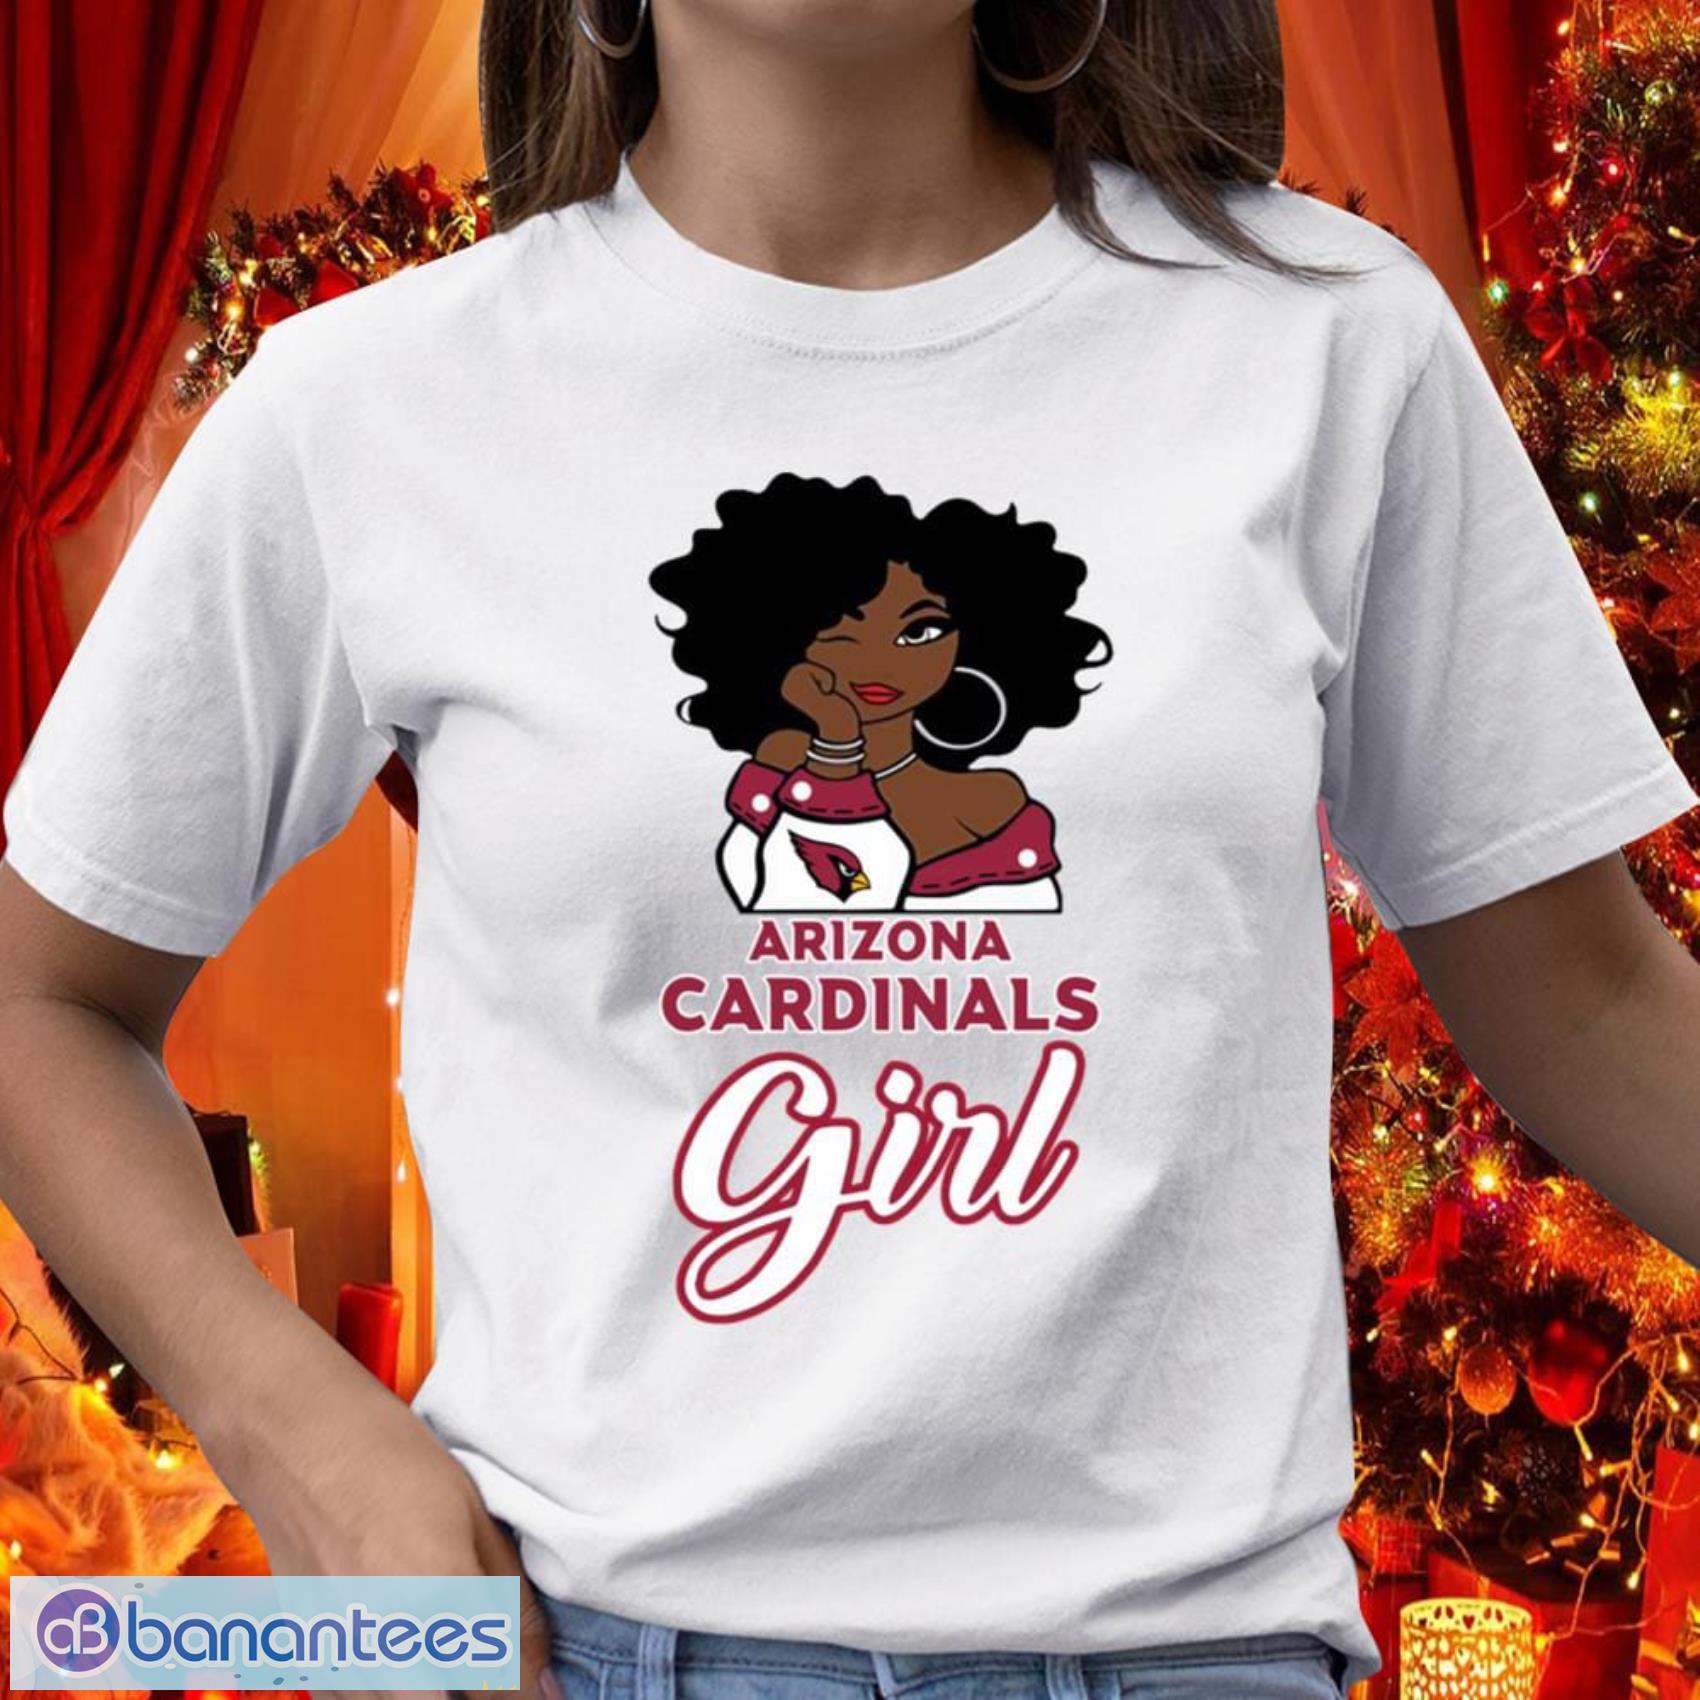 Arizona Cardinals Girl NFL T Shirt Gift For Sport Team's Fans - Banantees